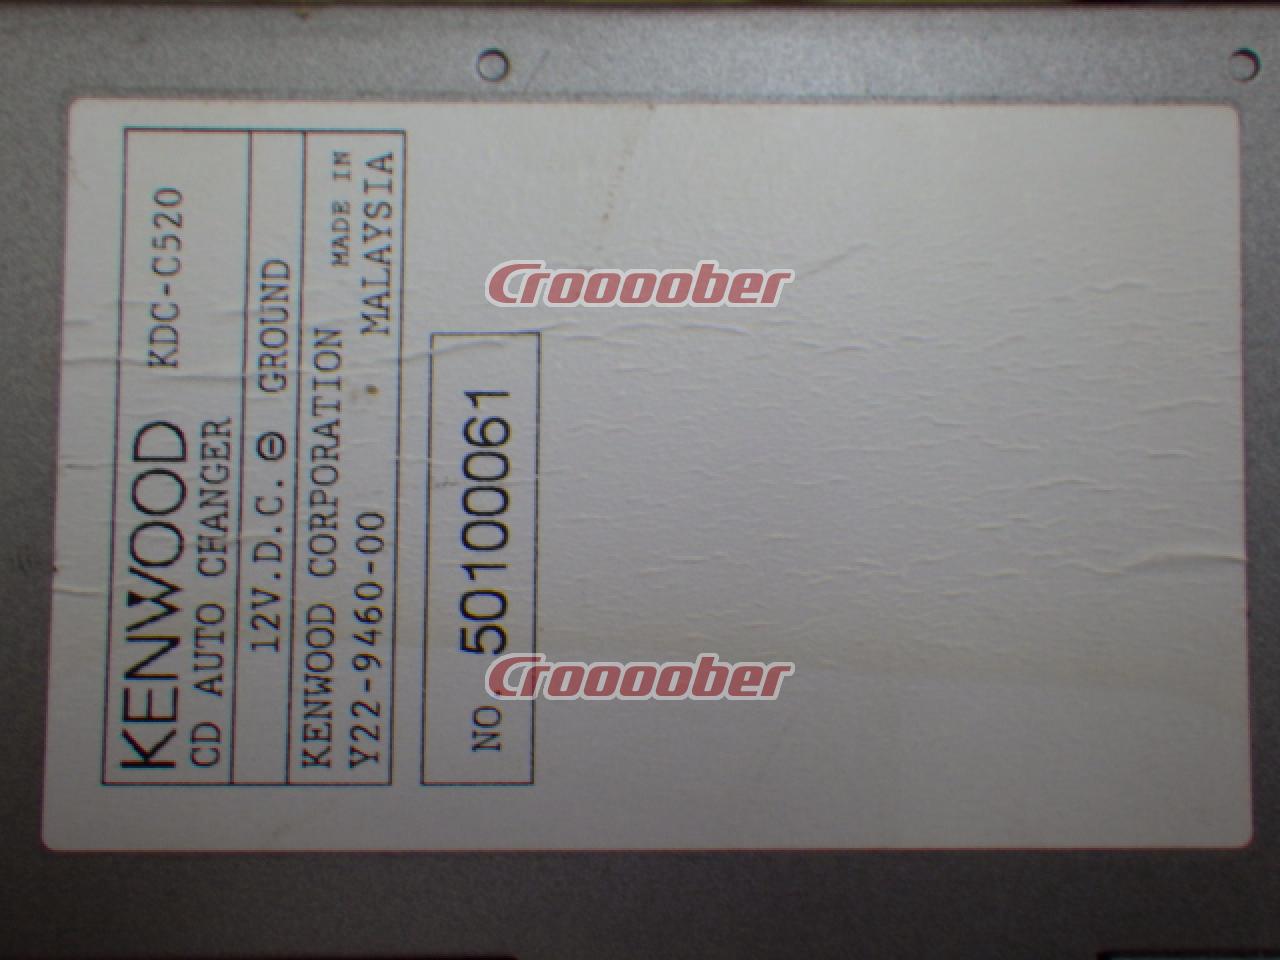 NI905-3110 KENWOOD E303+KDC-C520 10連奏CDチェンジャーセット